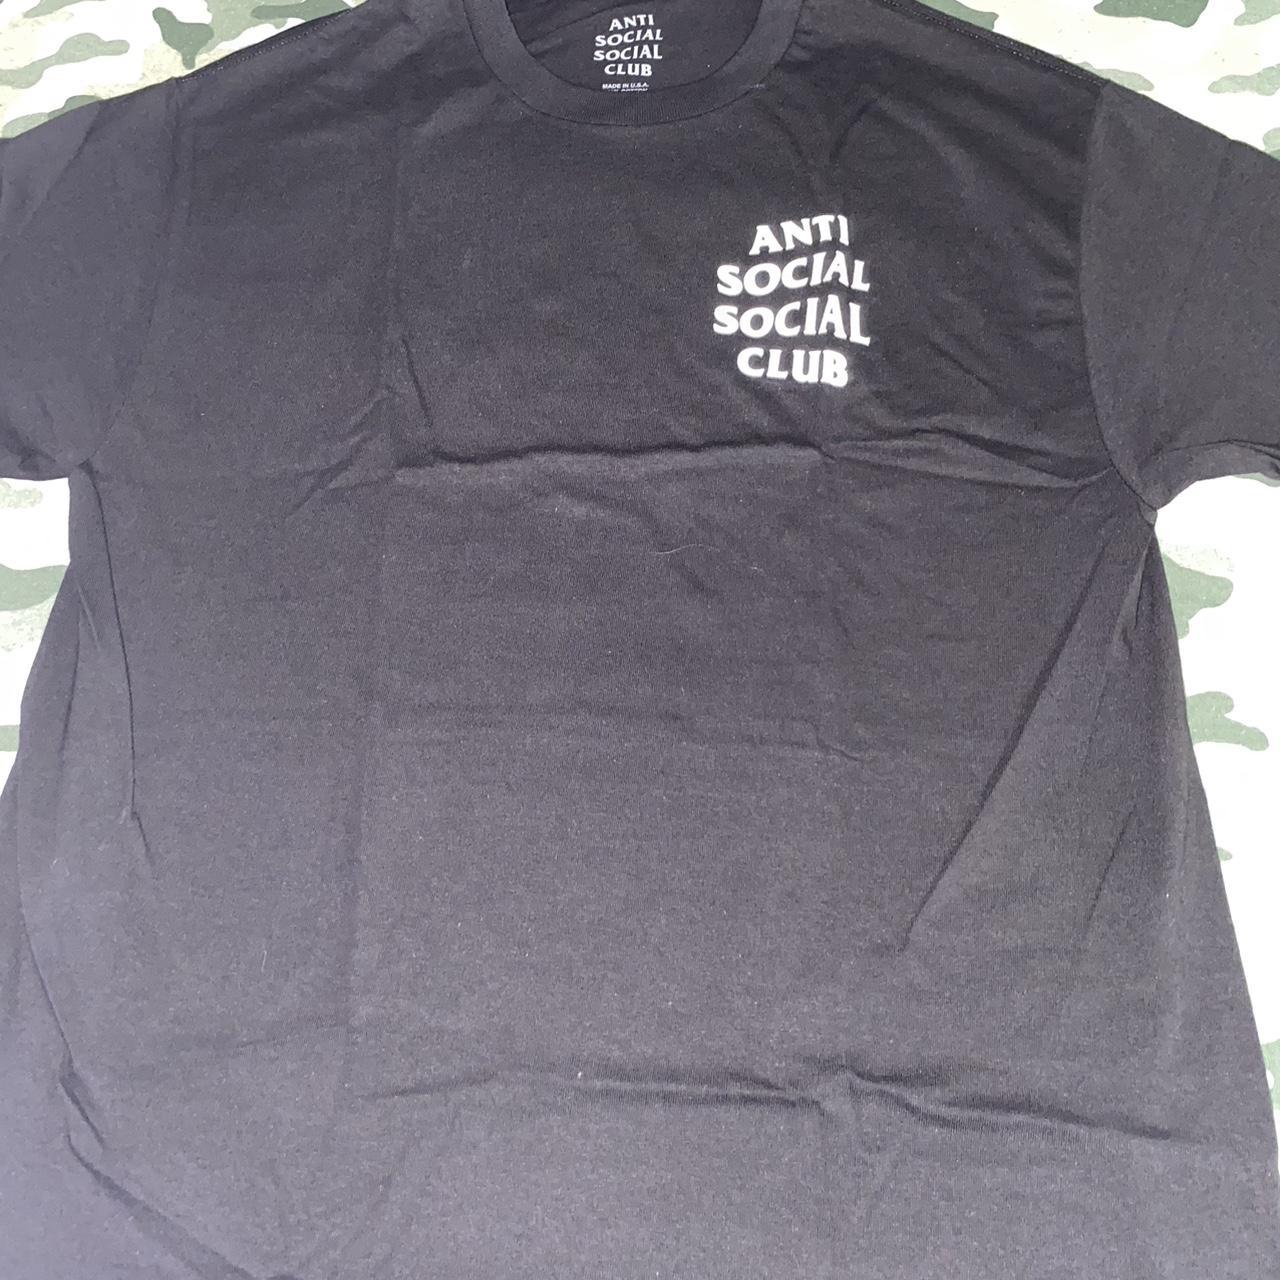 Anti Social Social Club Men's Black and White T-shirt